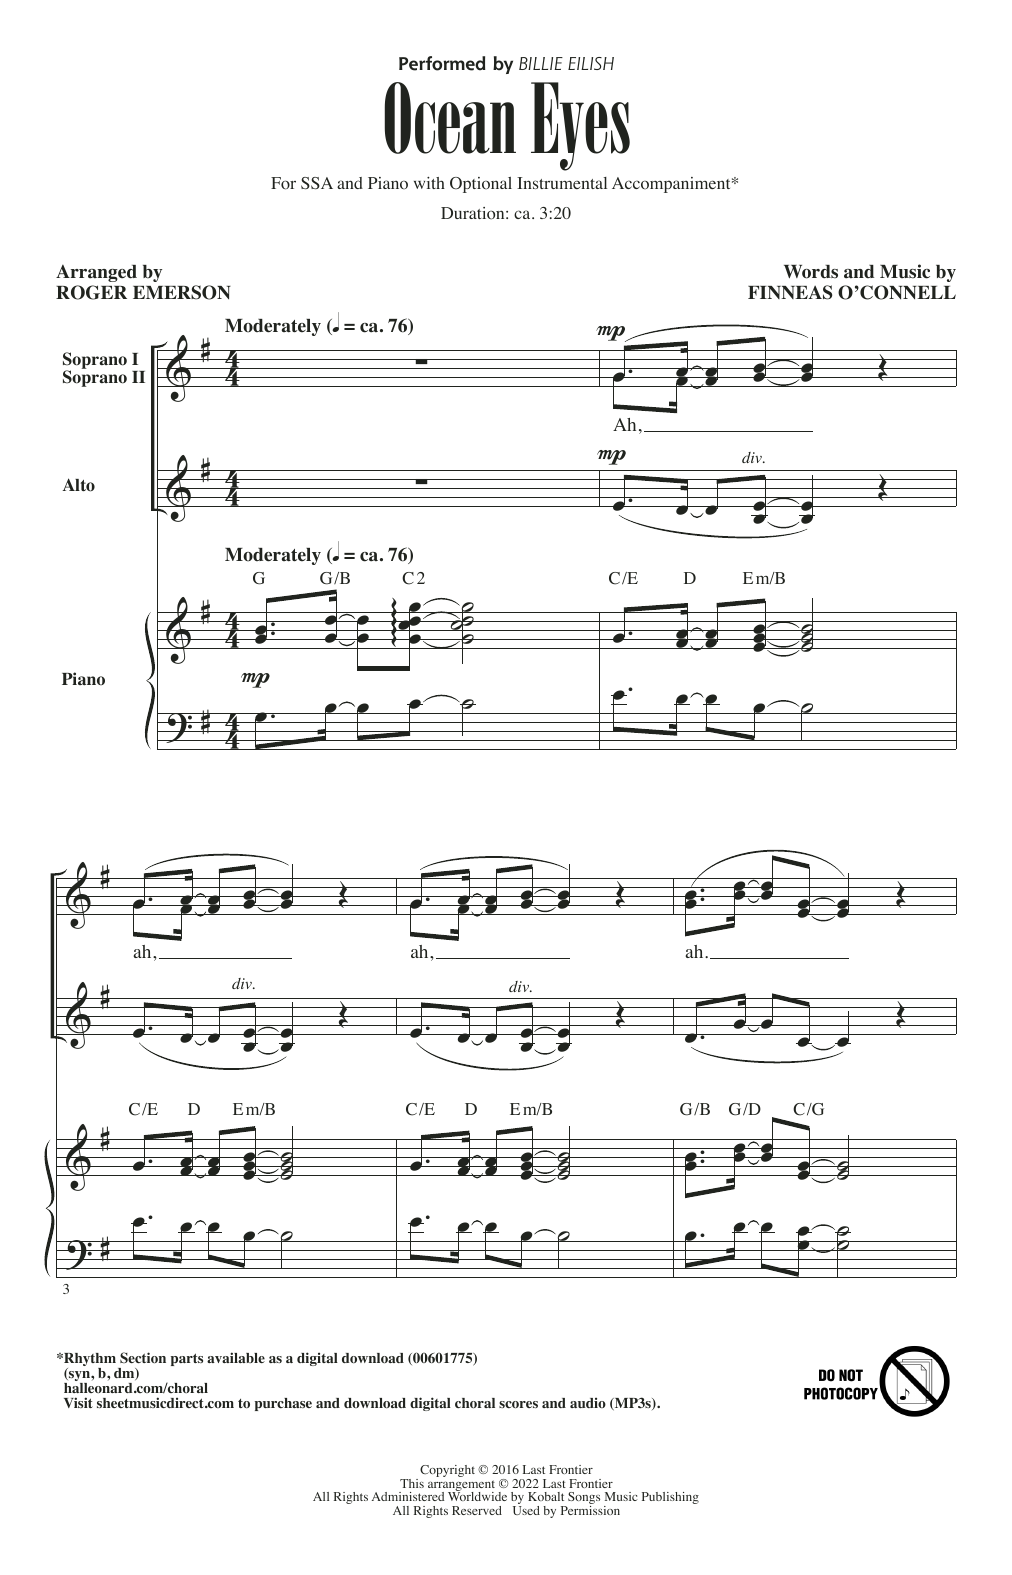 Billie Eilish ocean eyes (arr. Roger Emerson) Sheet Music Notes & Chords for SSA Choir - Download or Print PDF